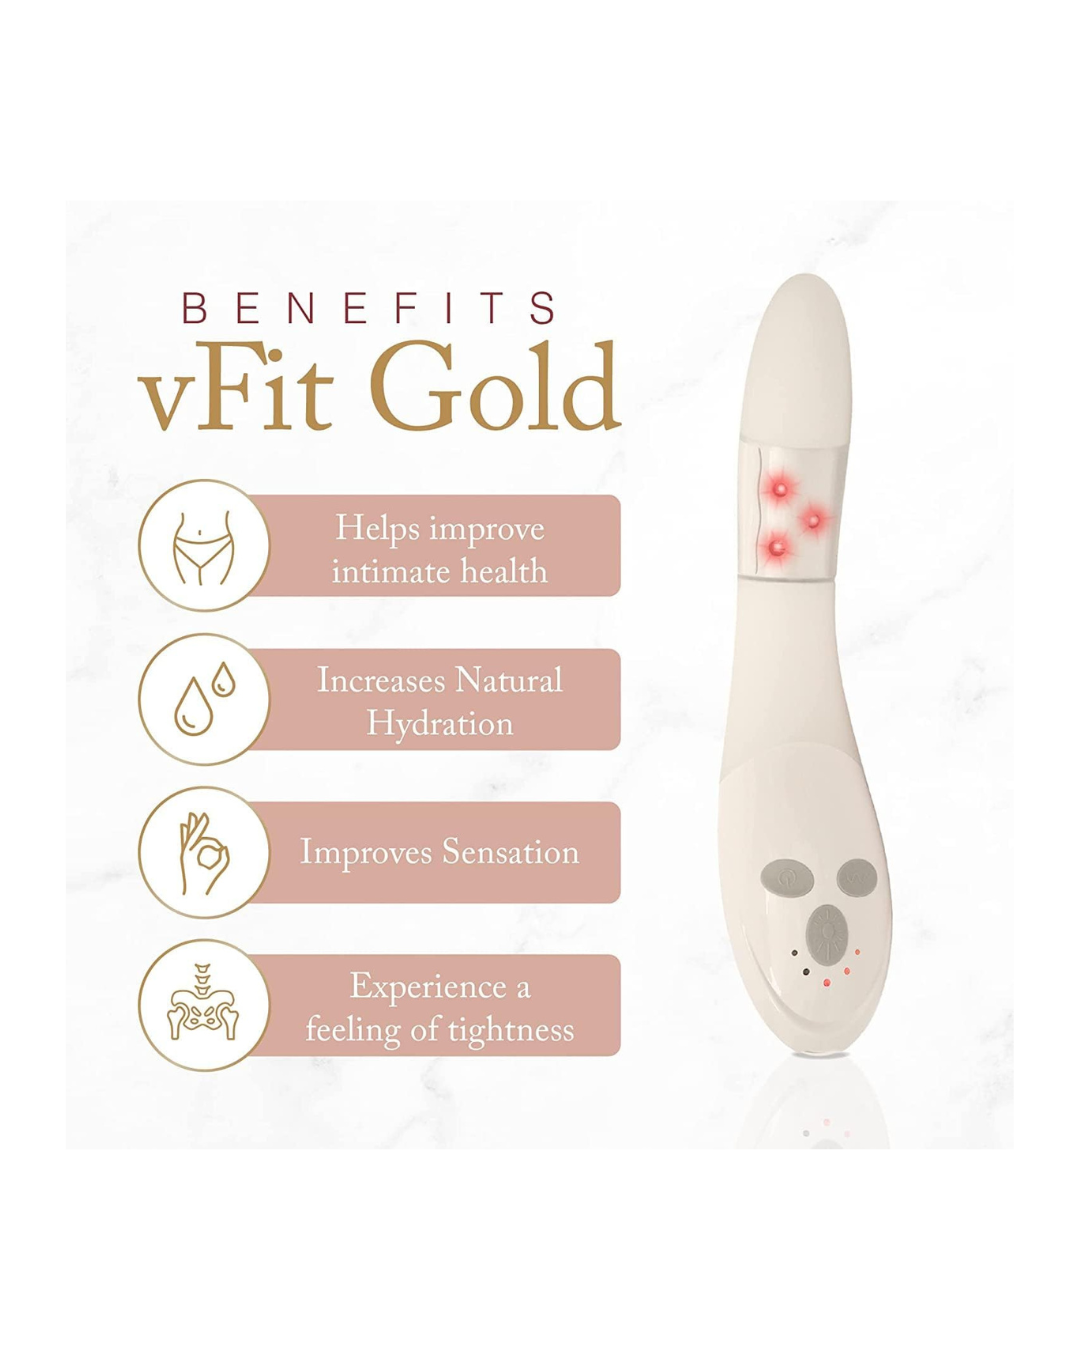 Joylux vFit Gold Intimate Wellness Device